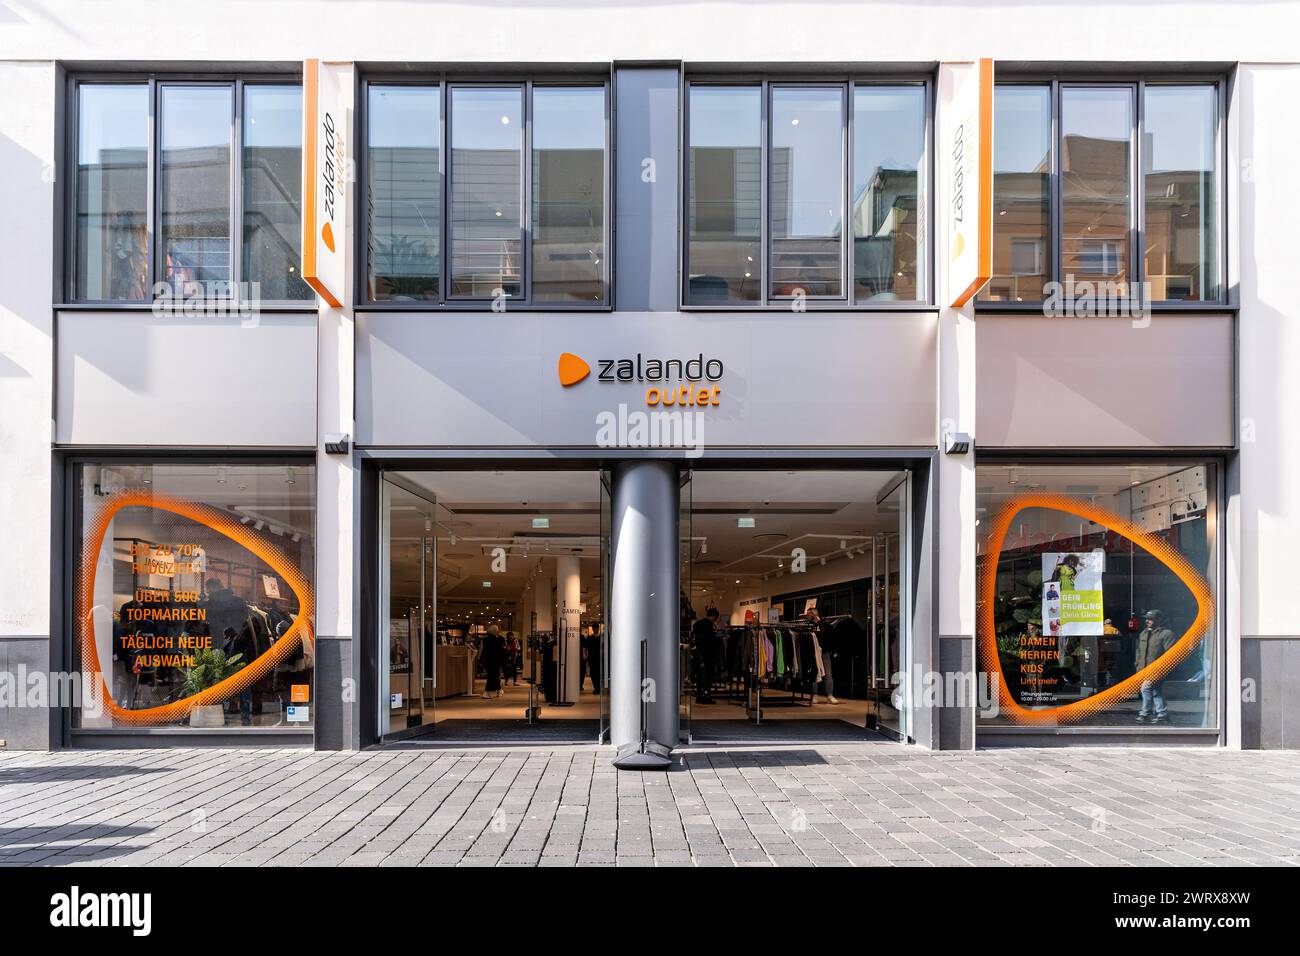 zalando outlet store in Bielefeld, Germany Stock Photo